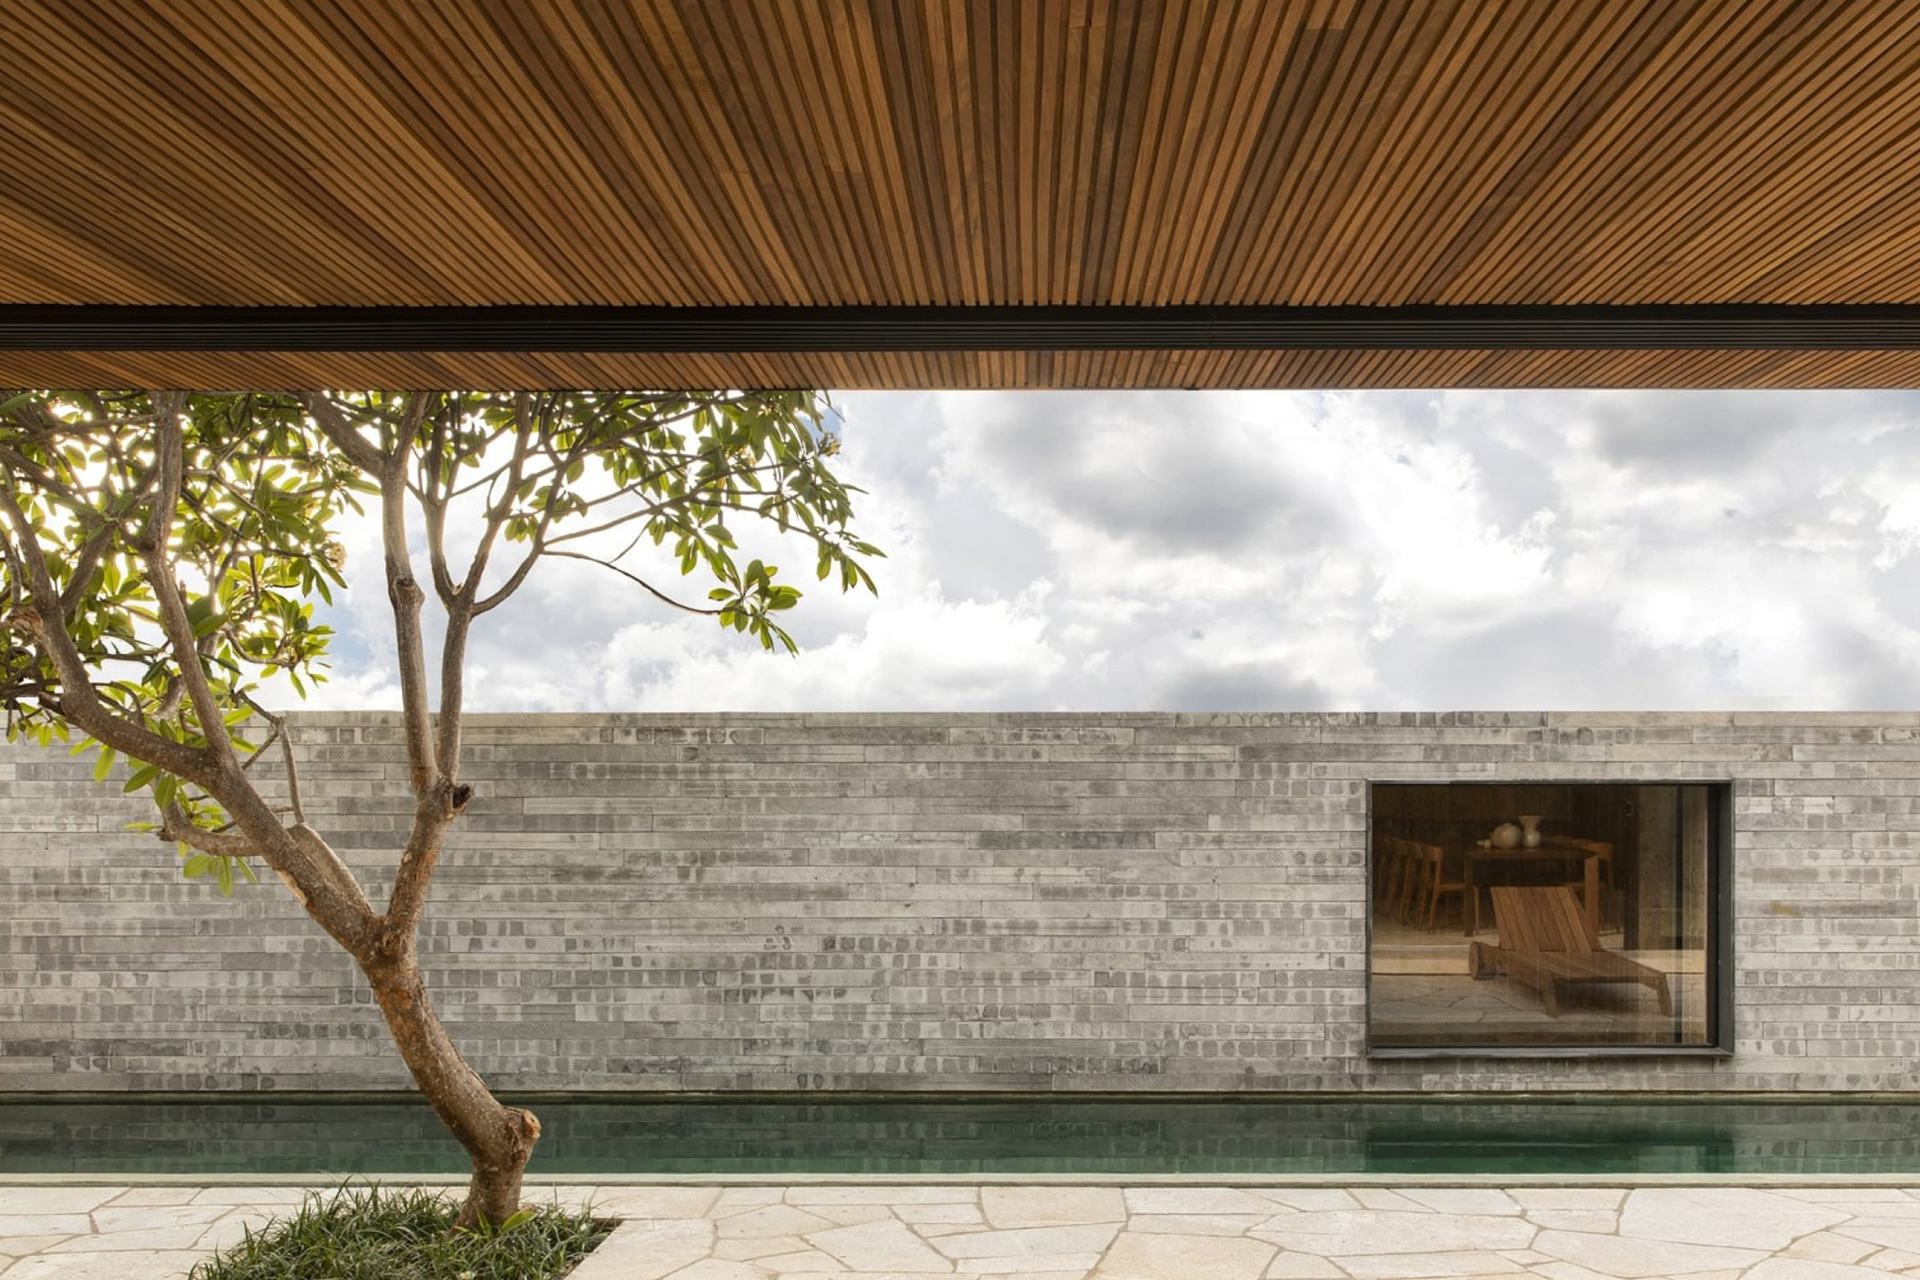 Casa Q04L63 by Brazilian firm mf+arquitetos